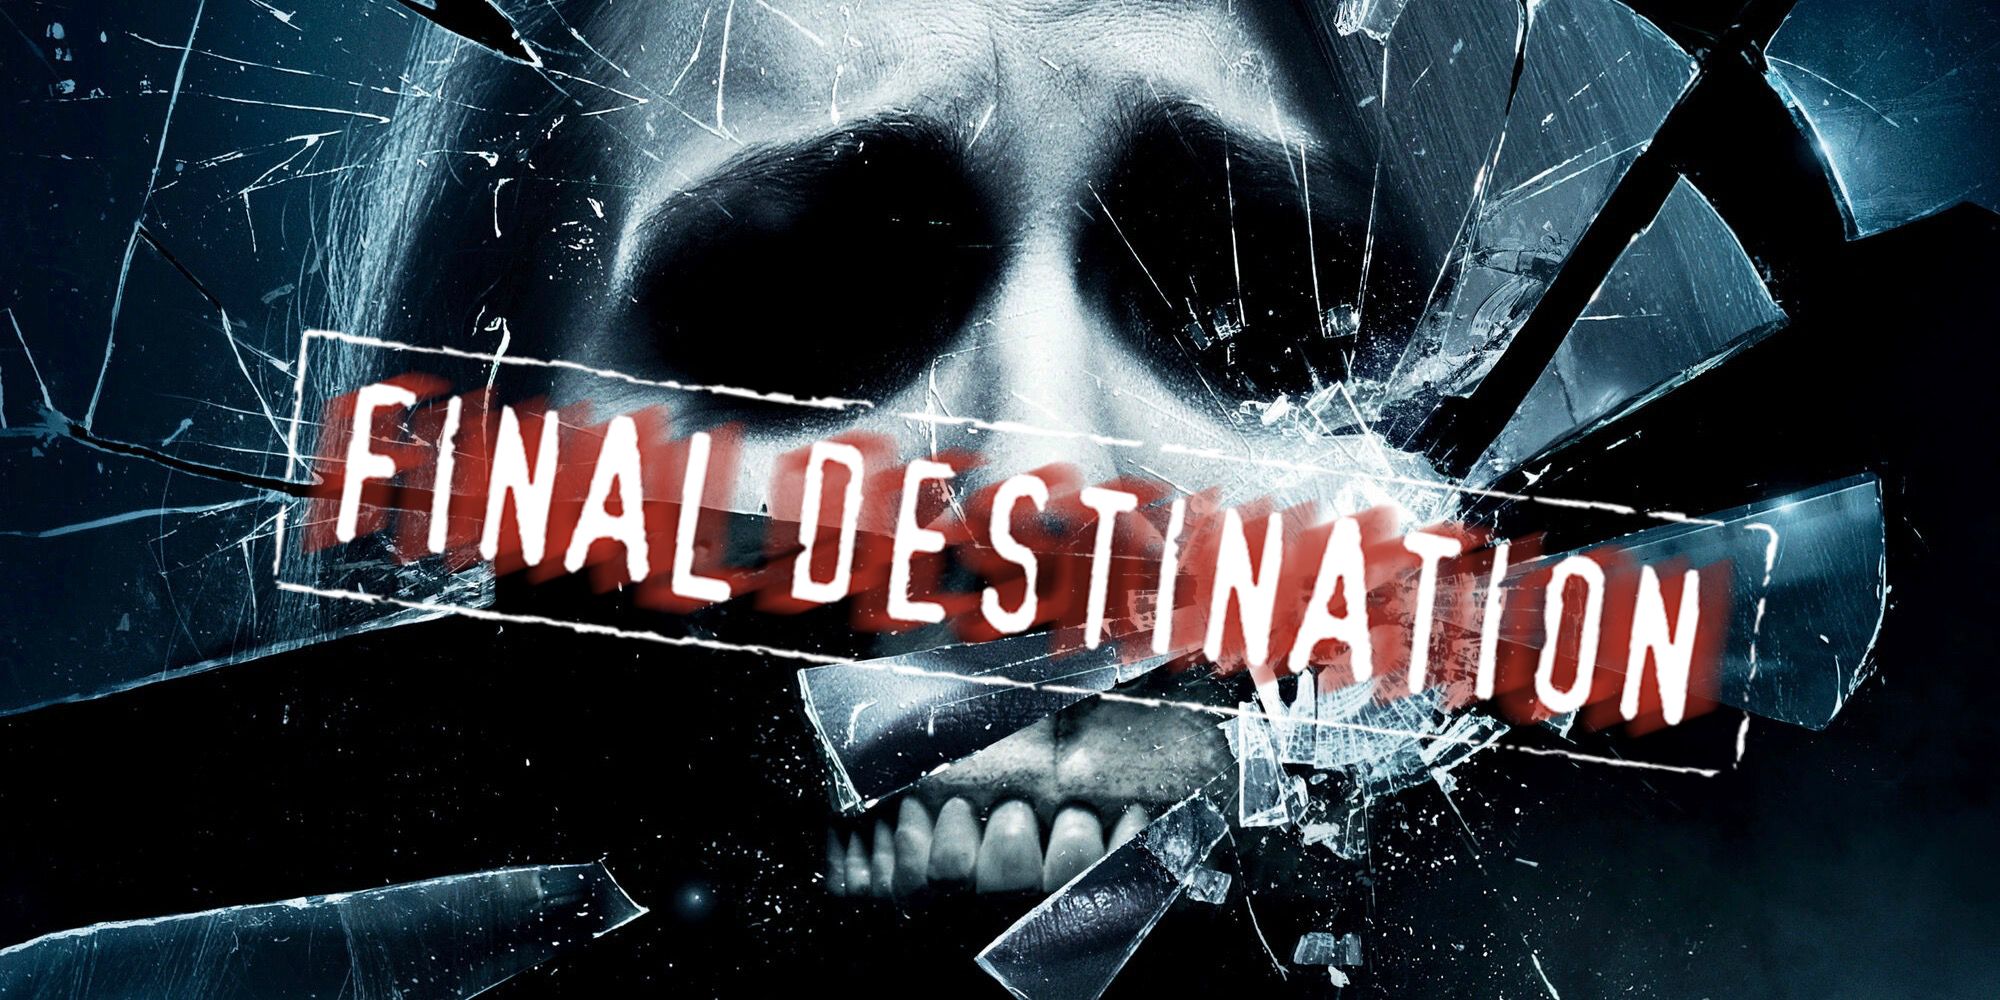 final destination 4 free full movie